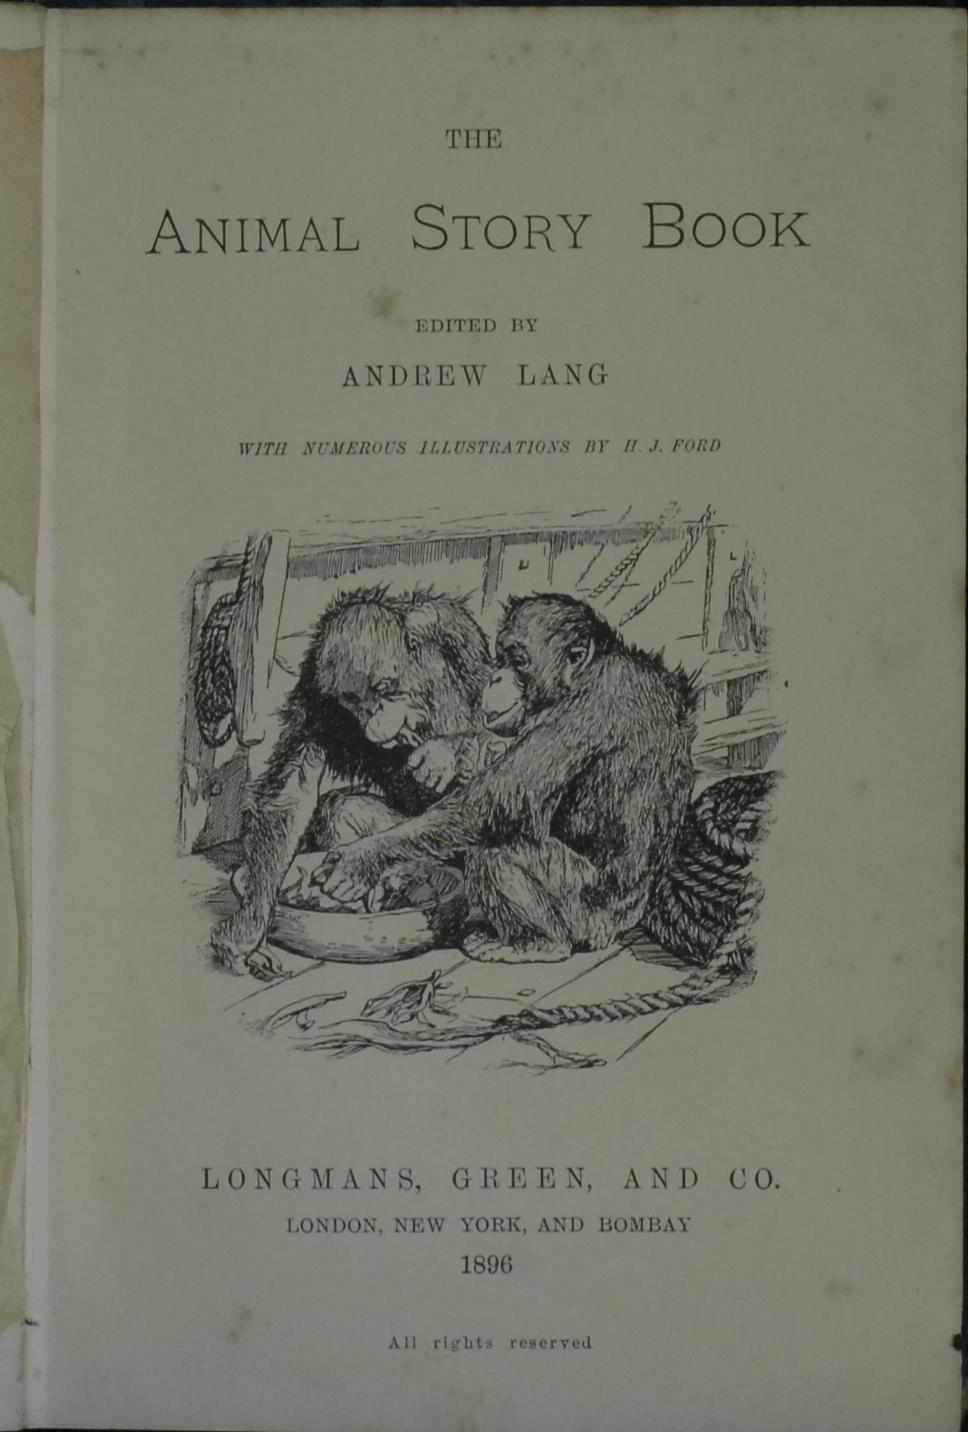 mbb006734e_-_Lang_Andrew_-_The_Animal_Story_Book_-_H_J_FORD.jpg